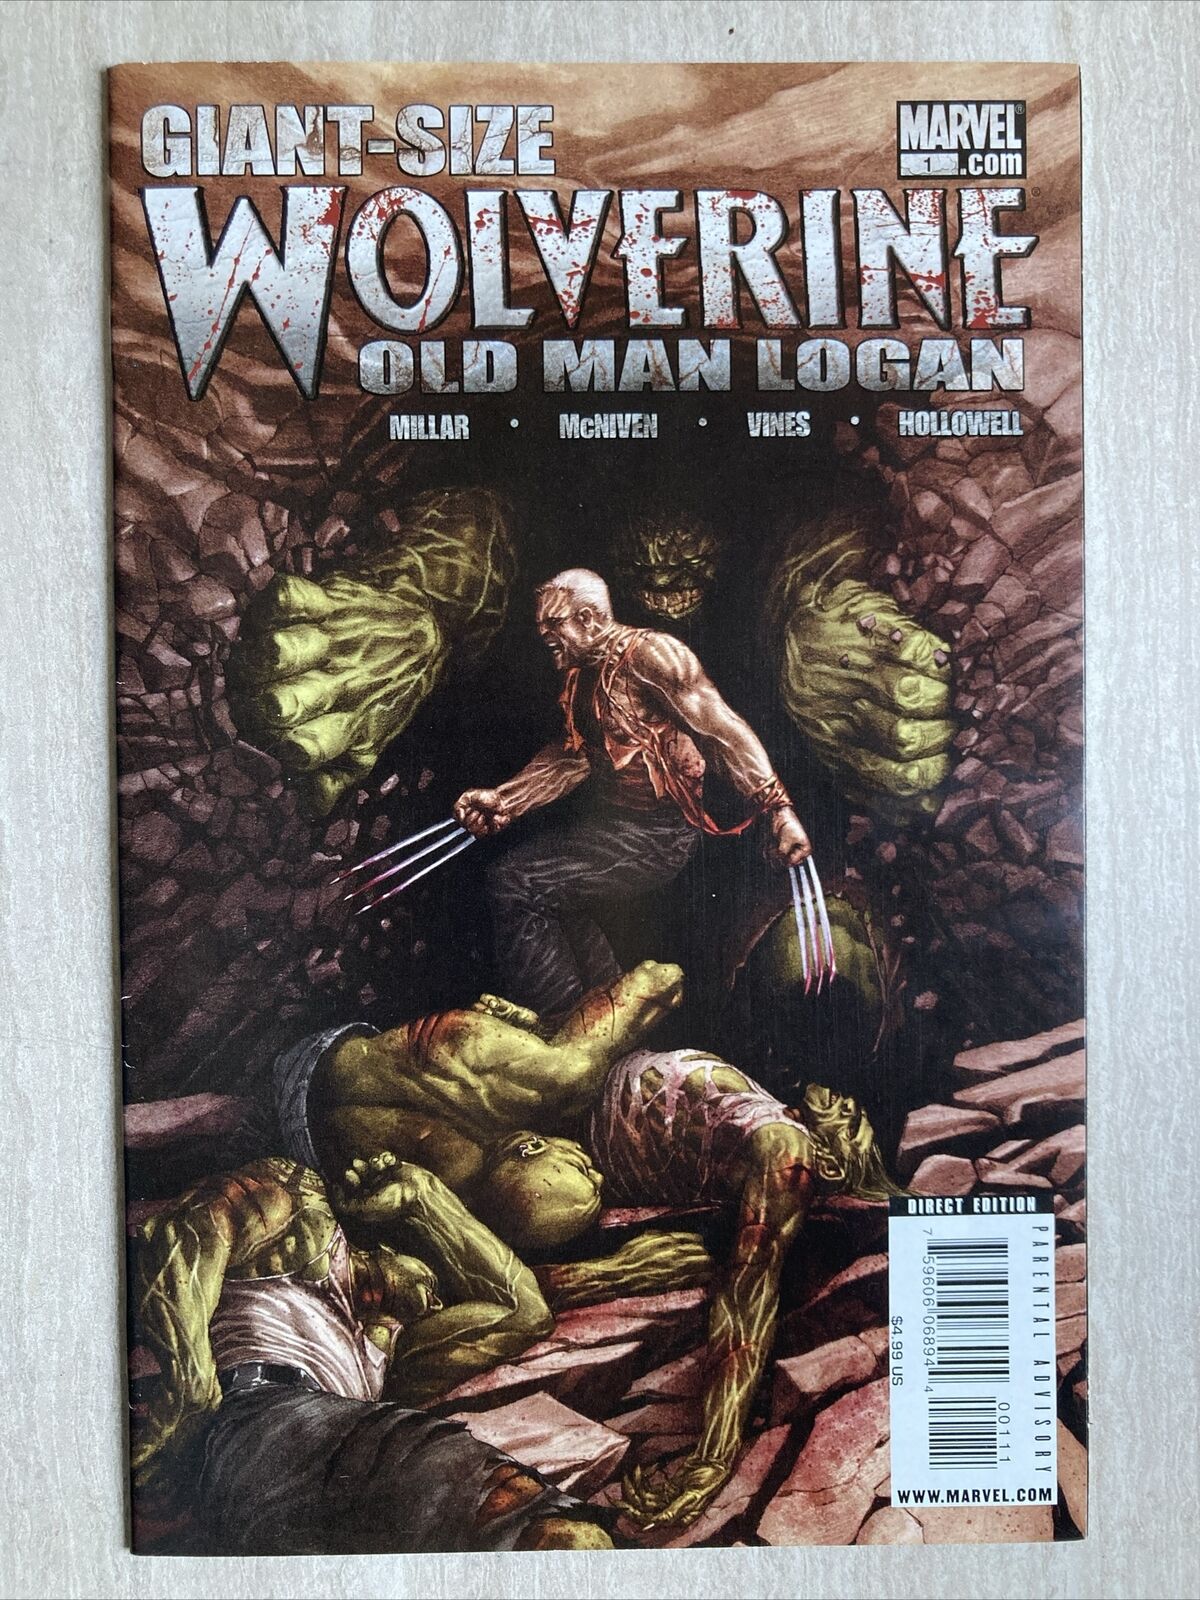 Giant-Size Wolverine: Old Man Logan #1 (Marvel Comics 2009)